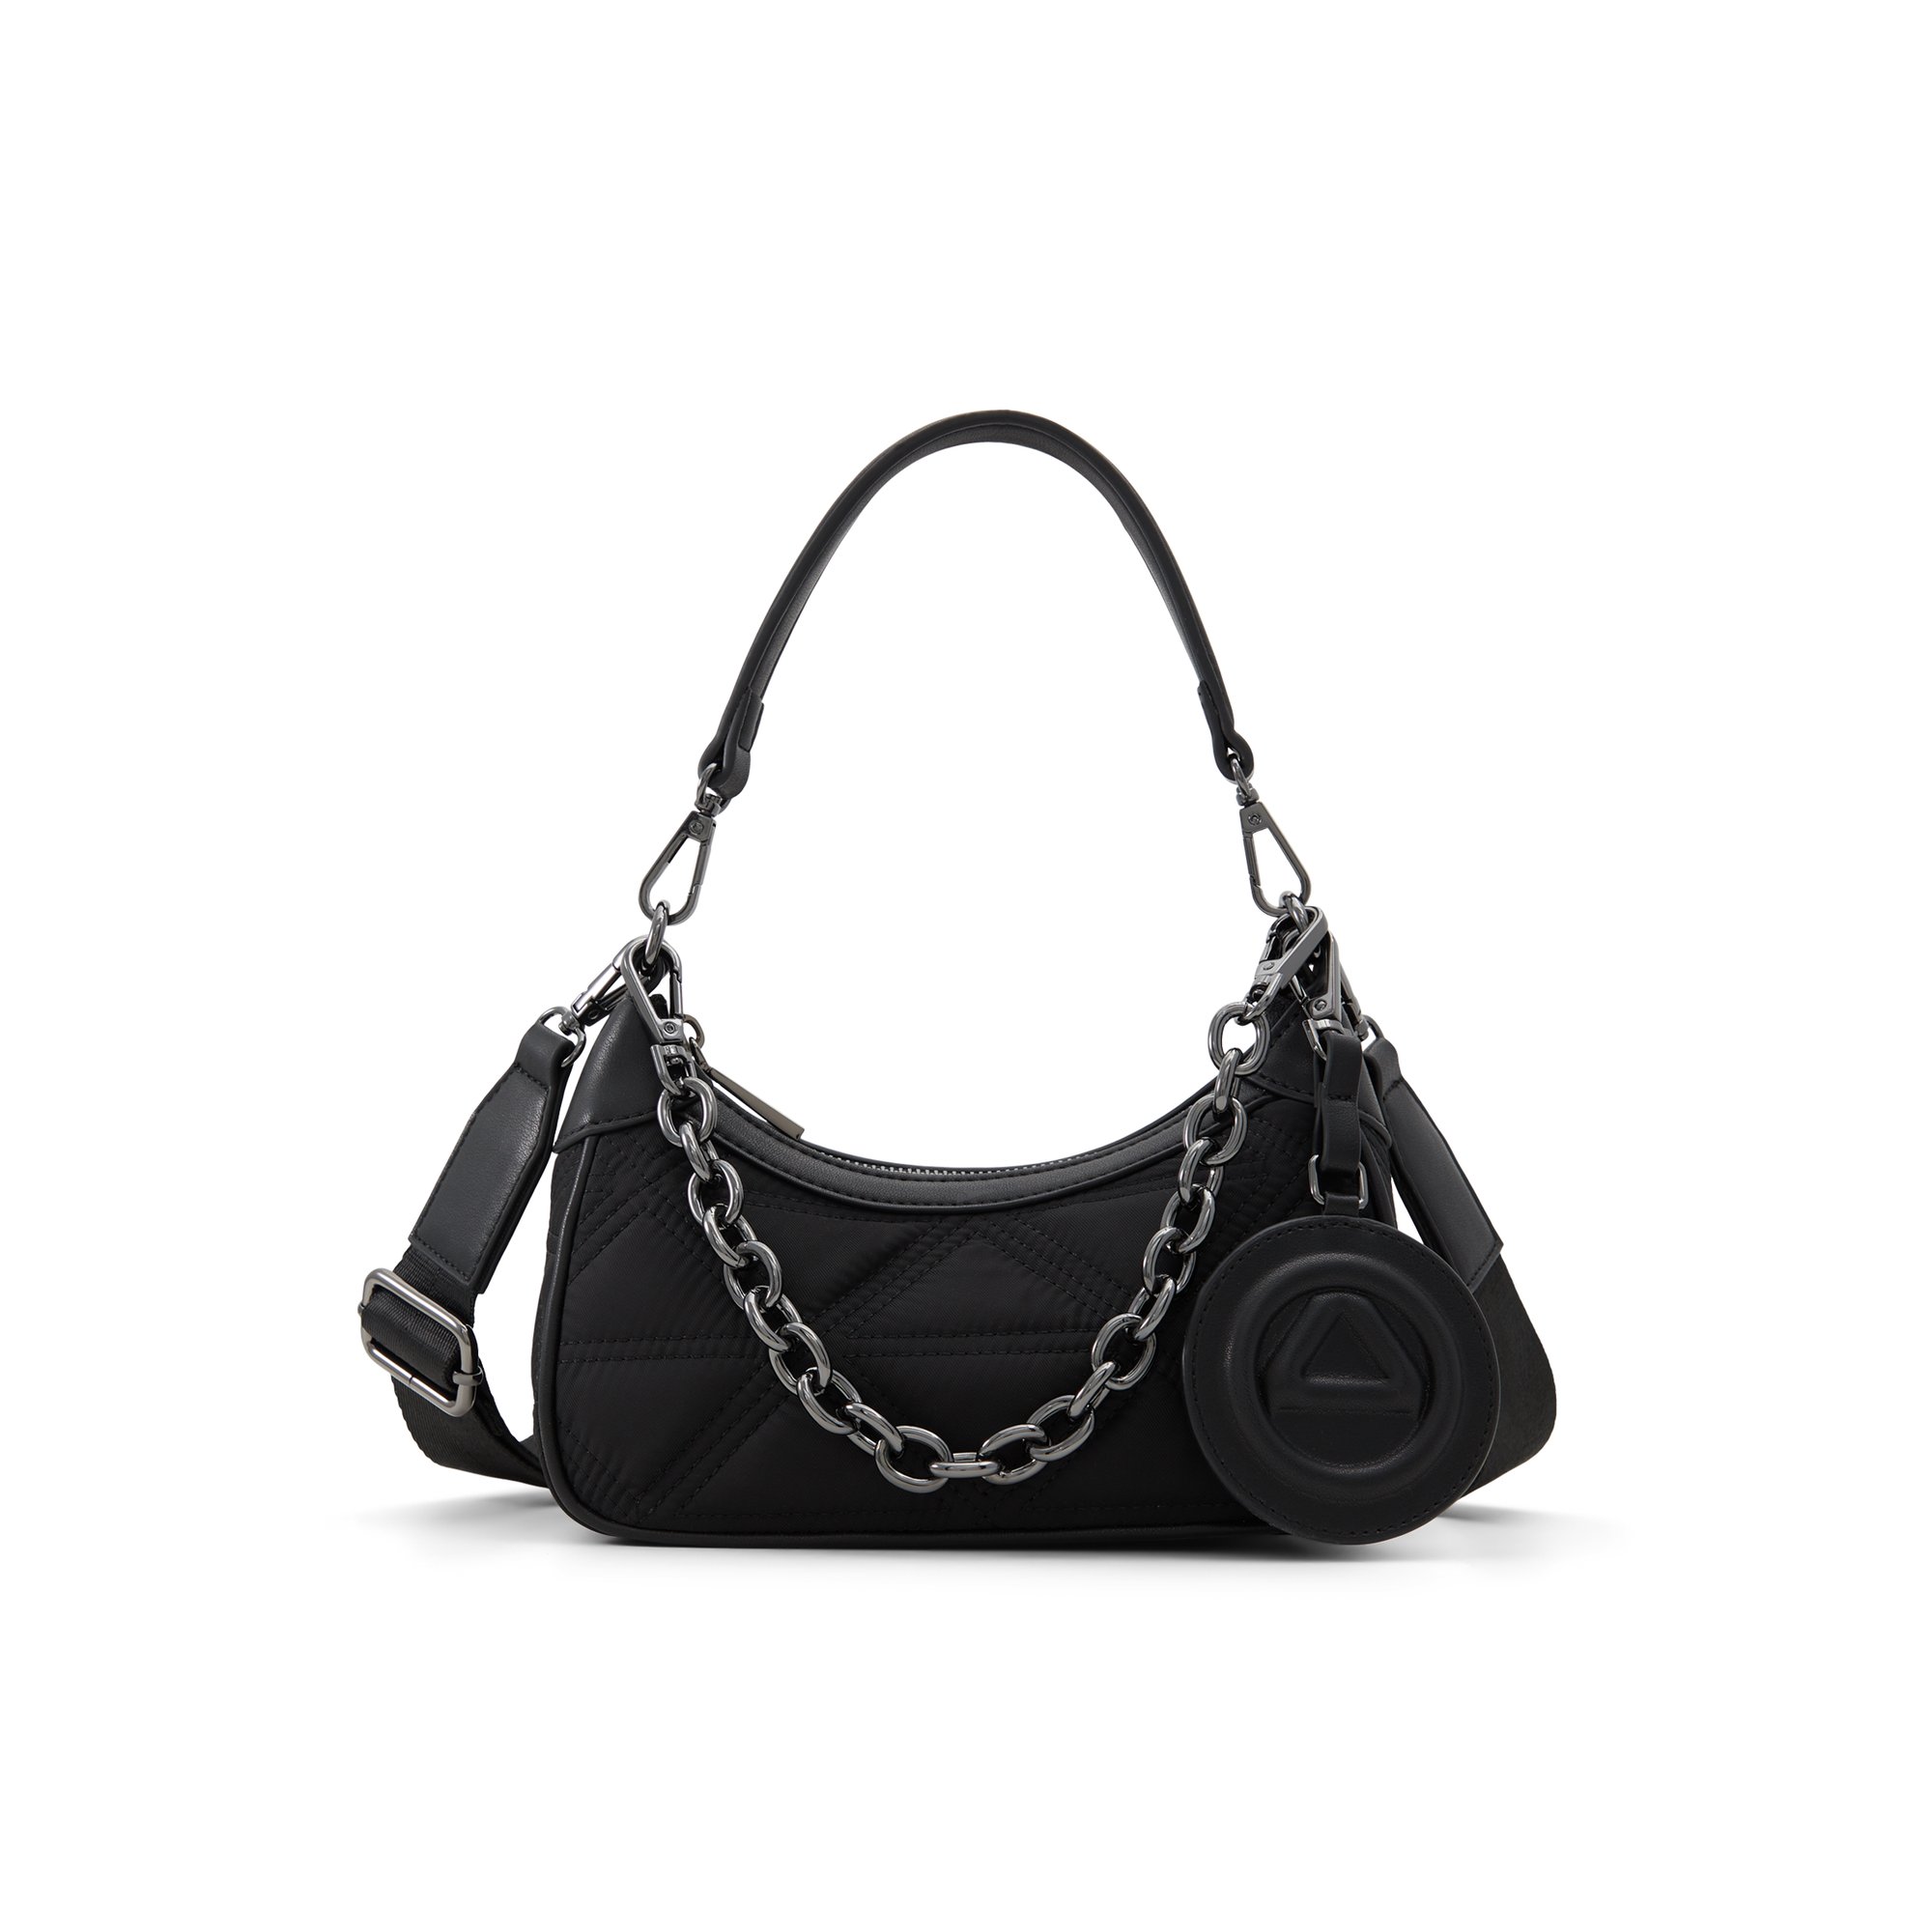 ALDO Ferventx - Women's Handbags Shoulder Bags - Black